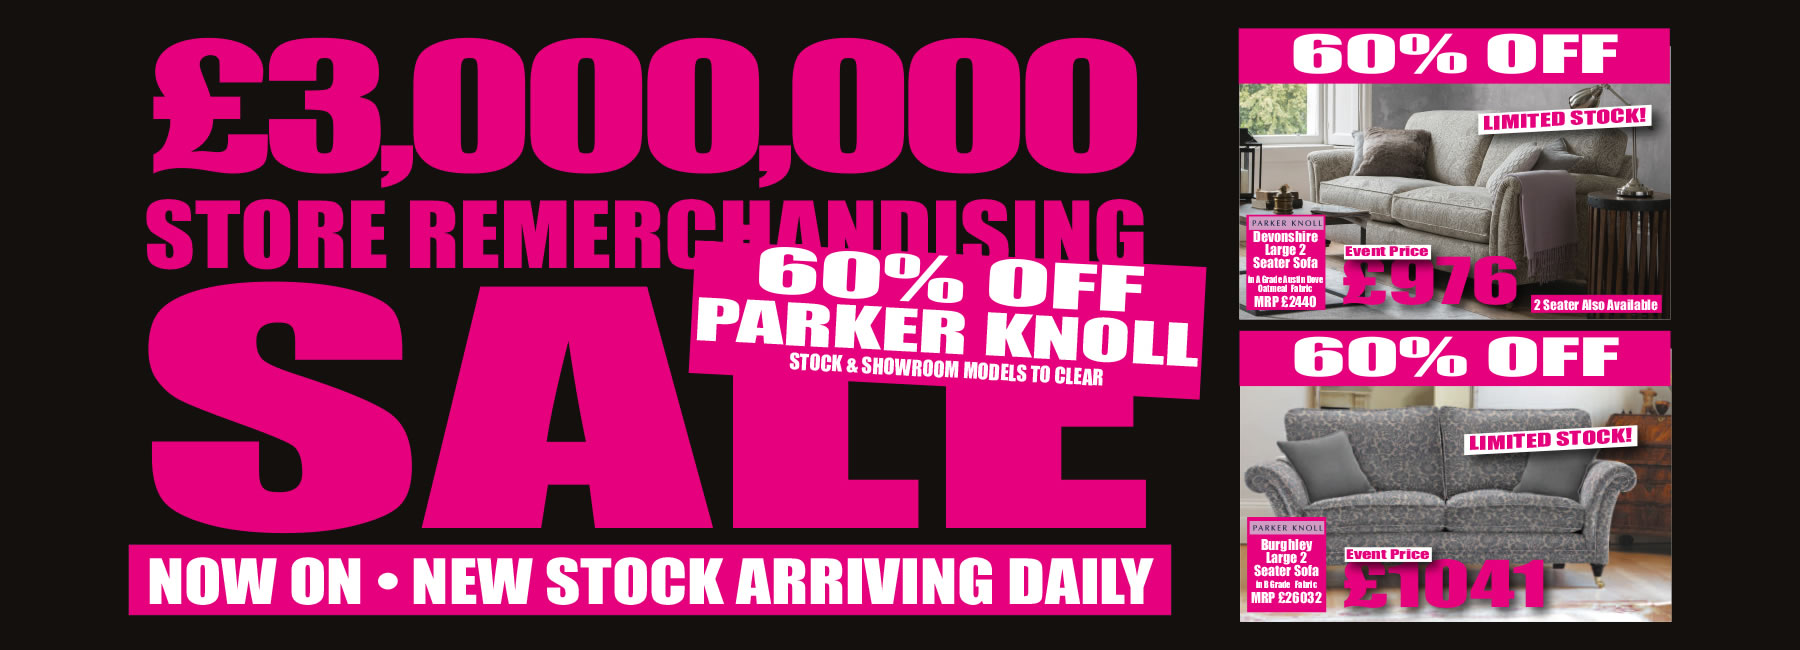 60% Off Parker Knoll